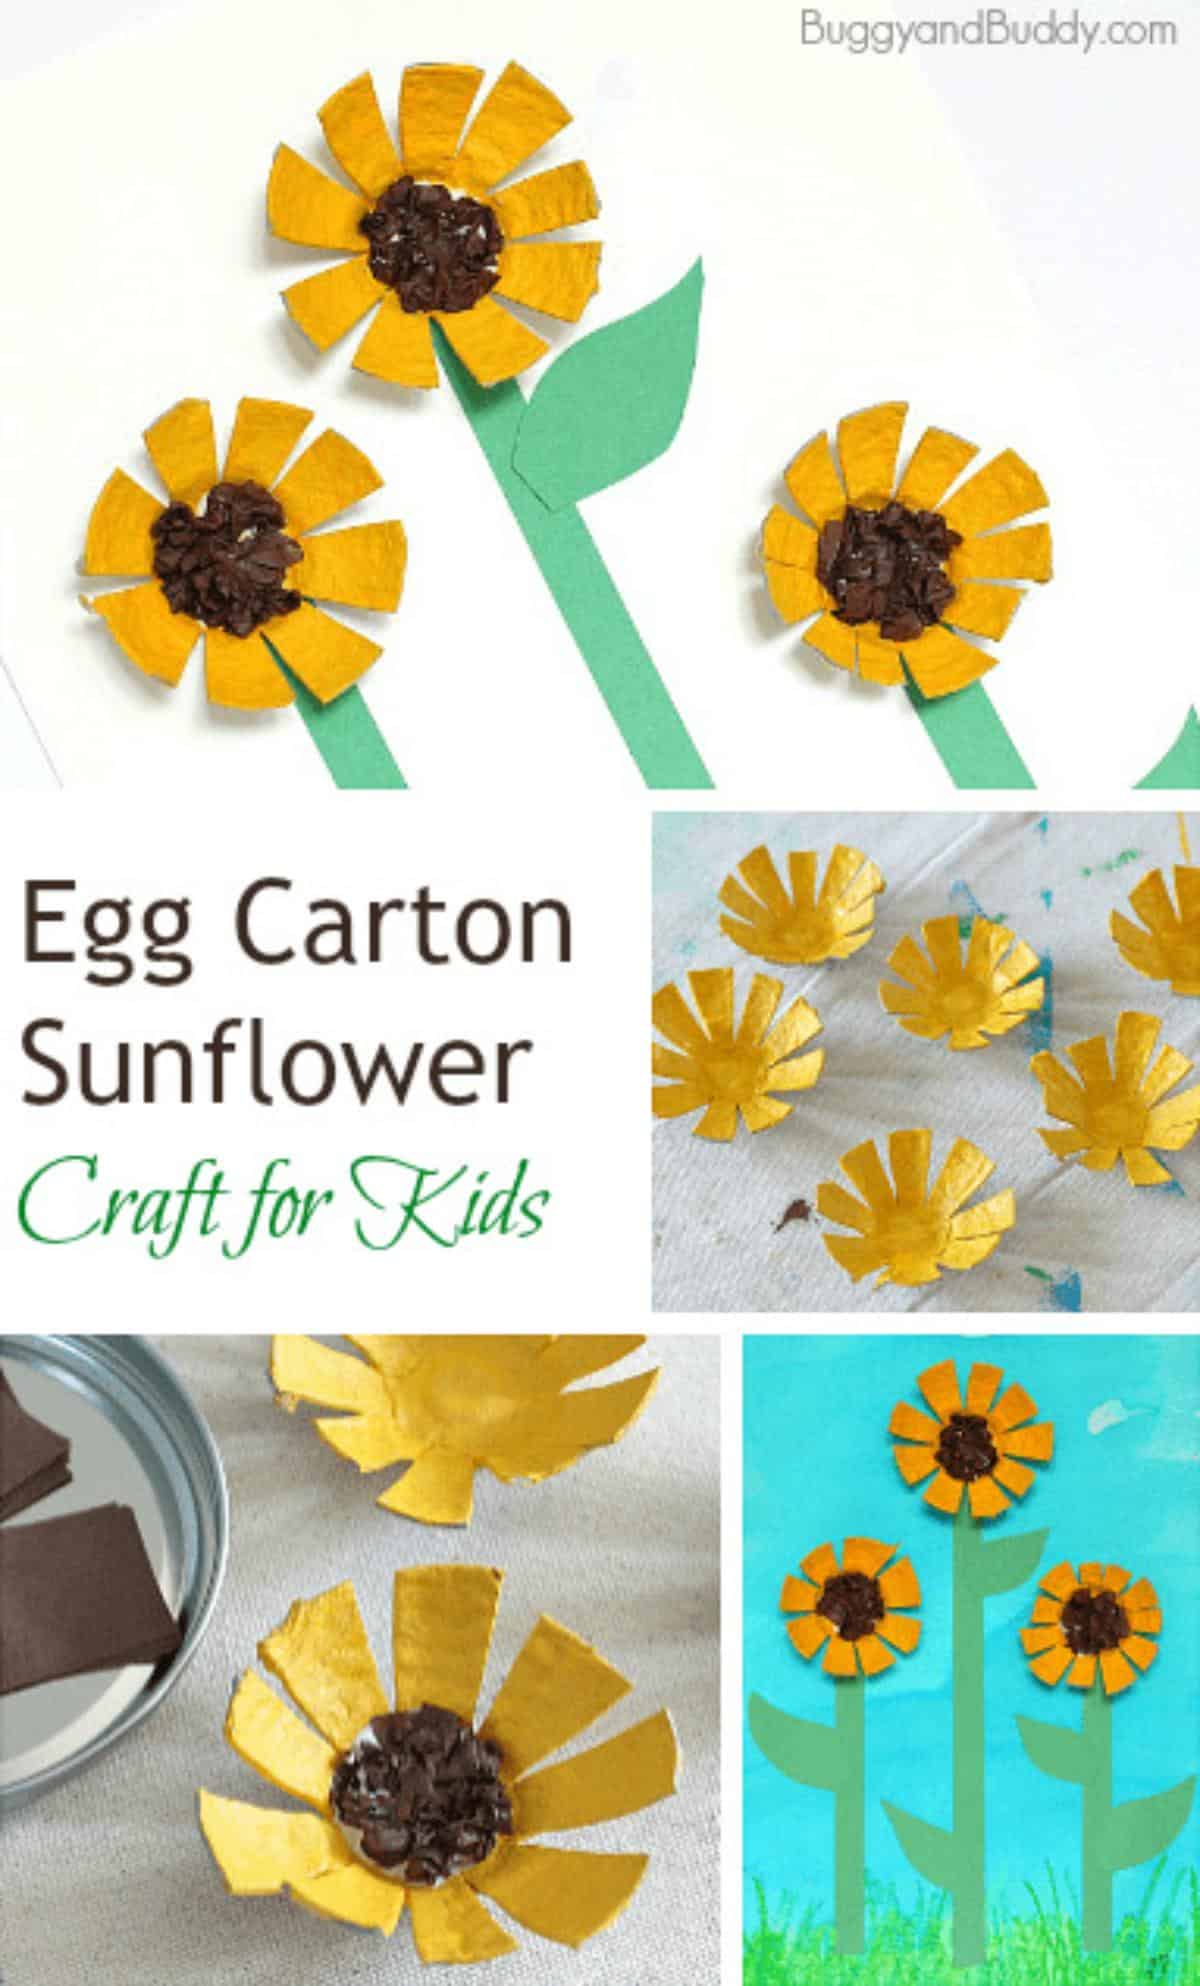 Egg carton Sunflower Project for Kids